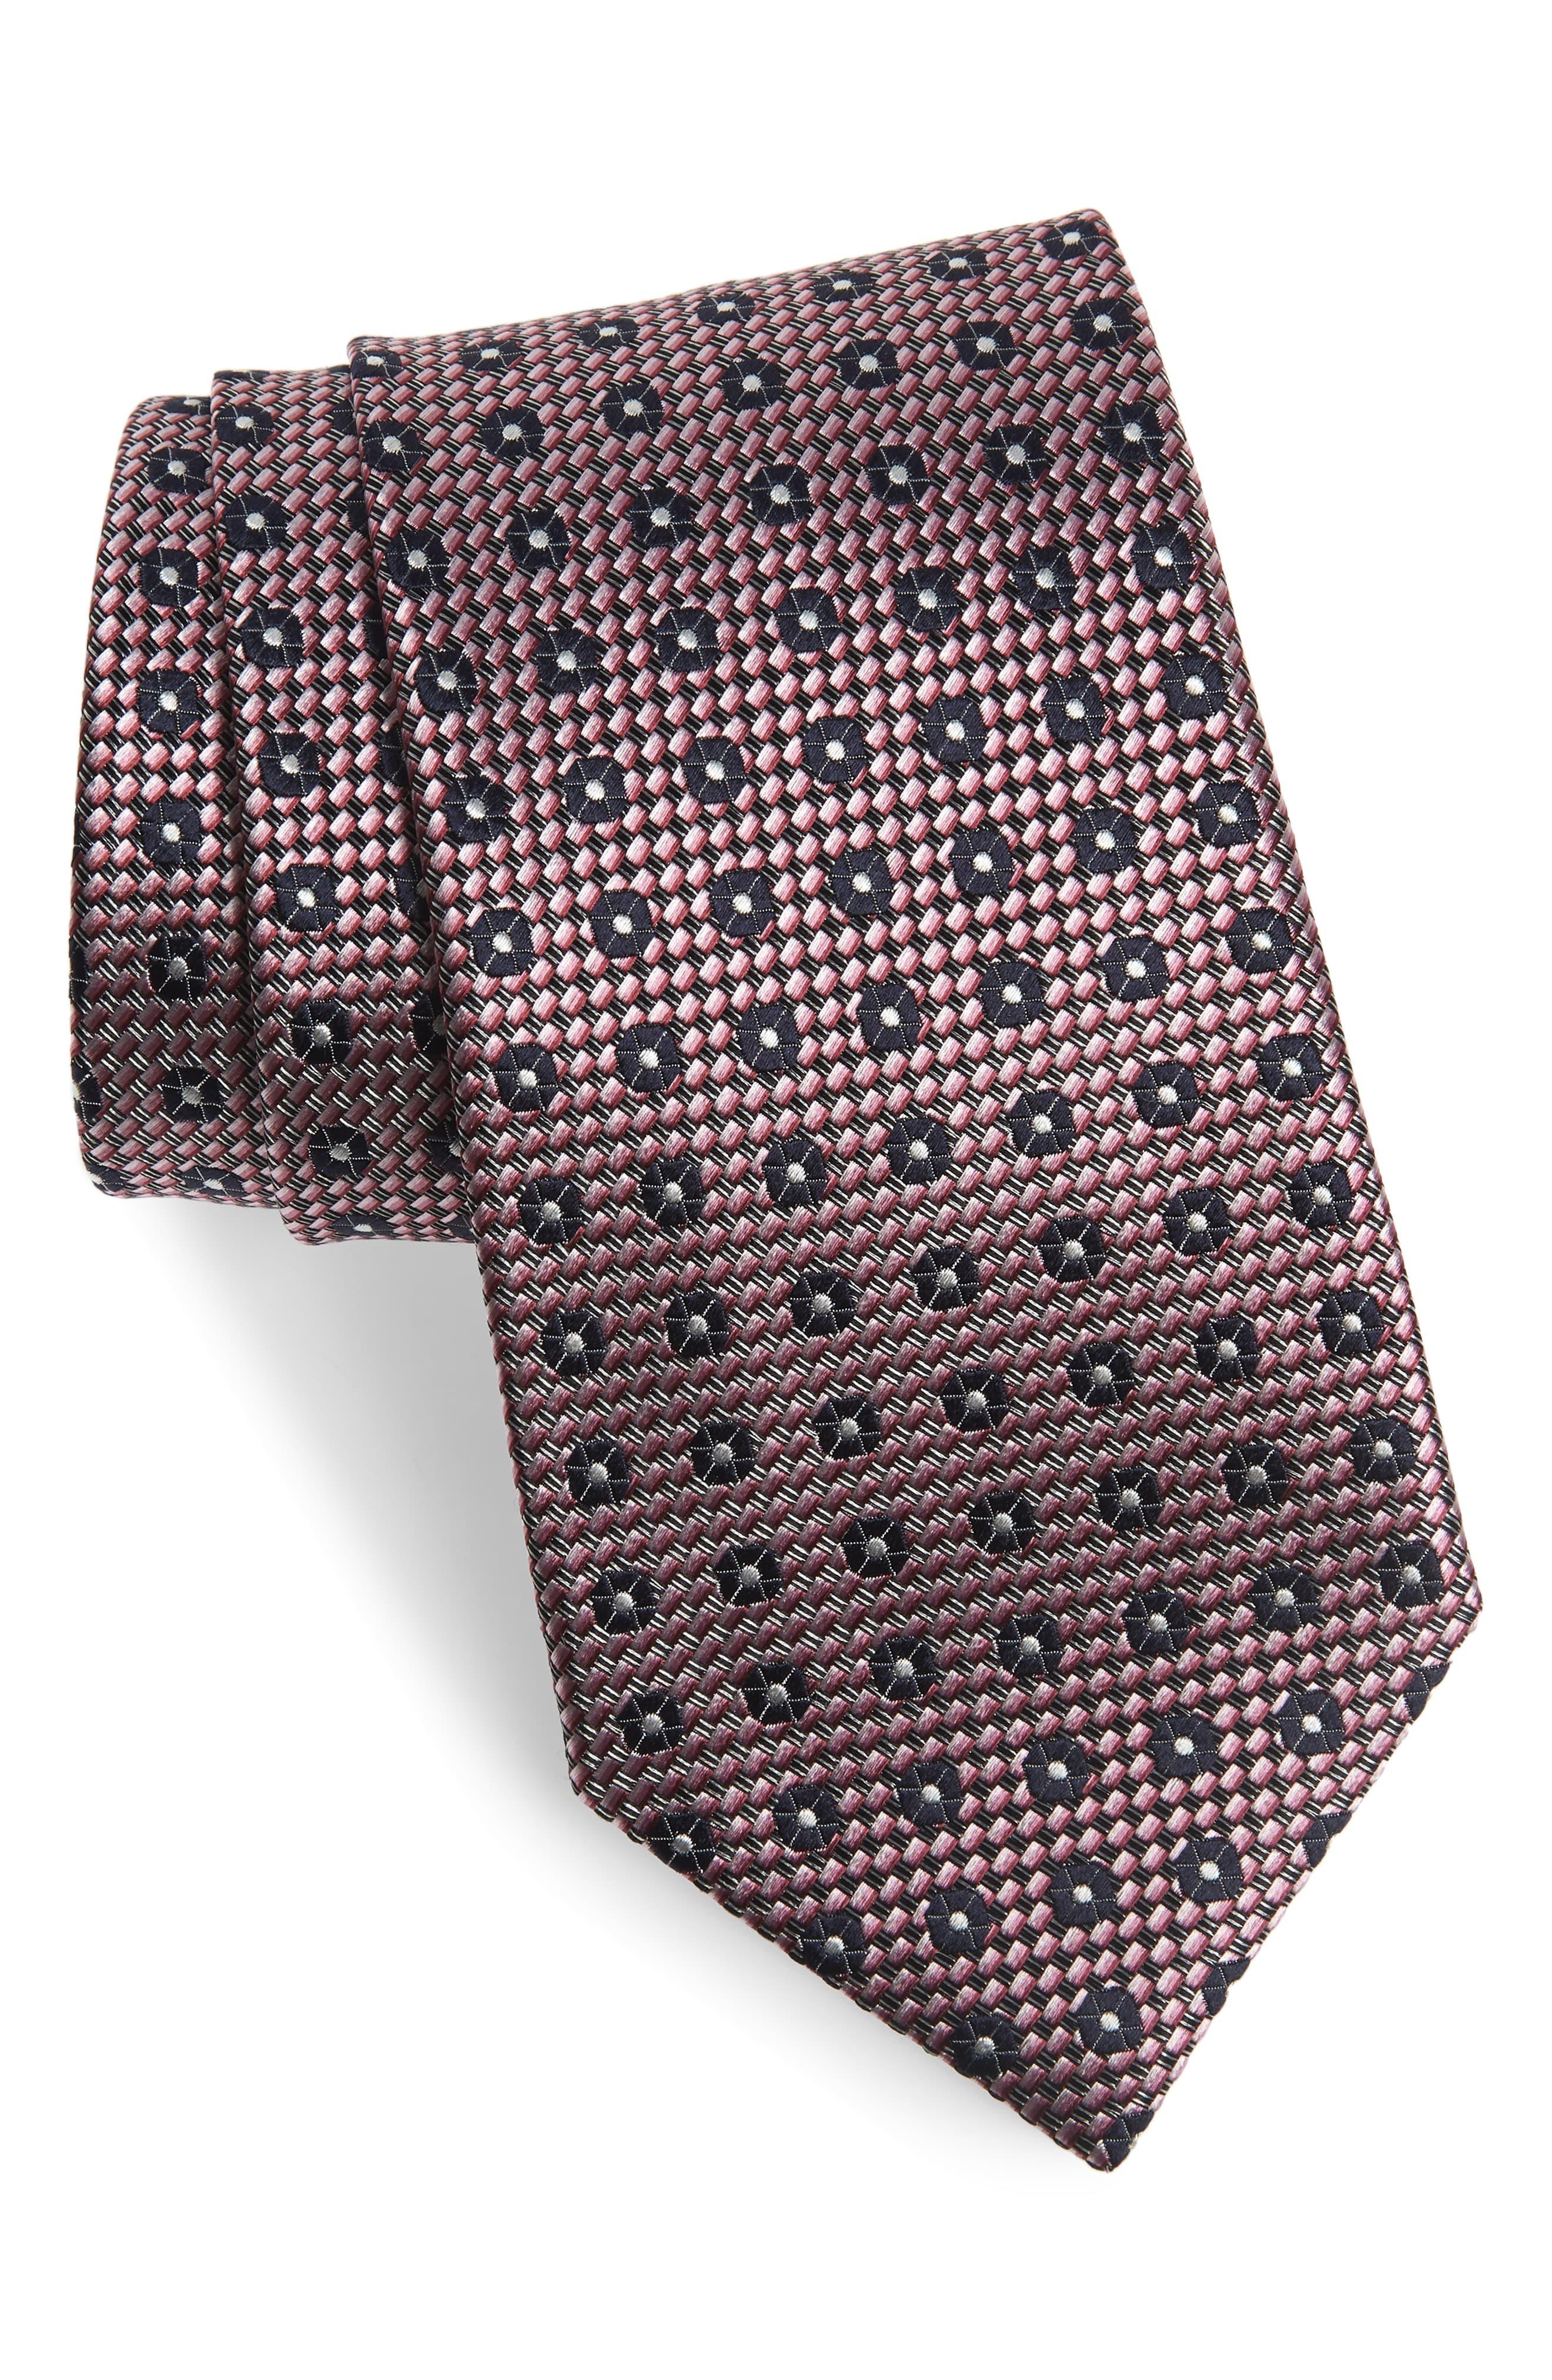 Ermenegildo Zegna Medallion Silk Tie in Pink for Men - Lyst